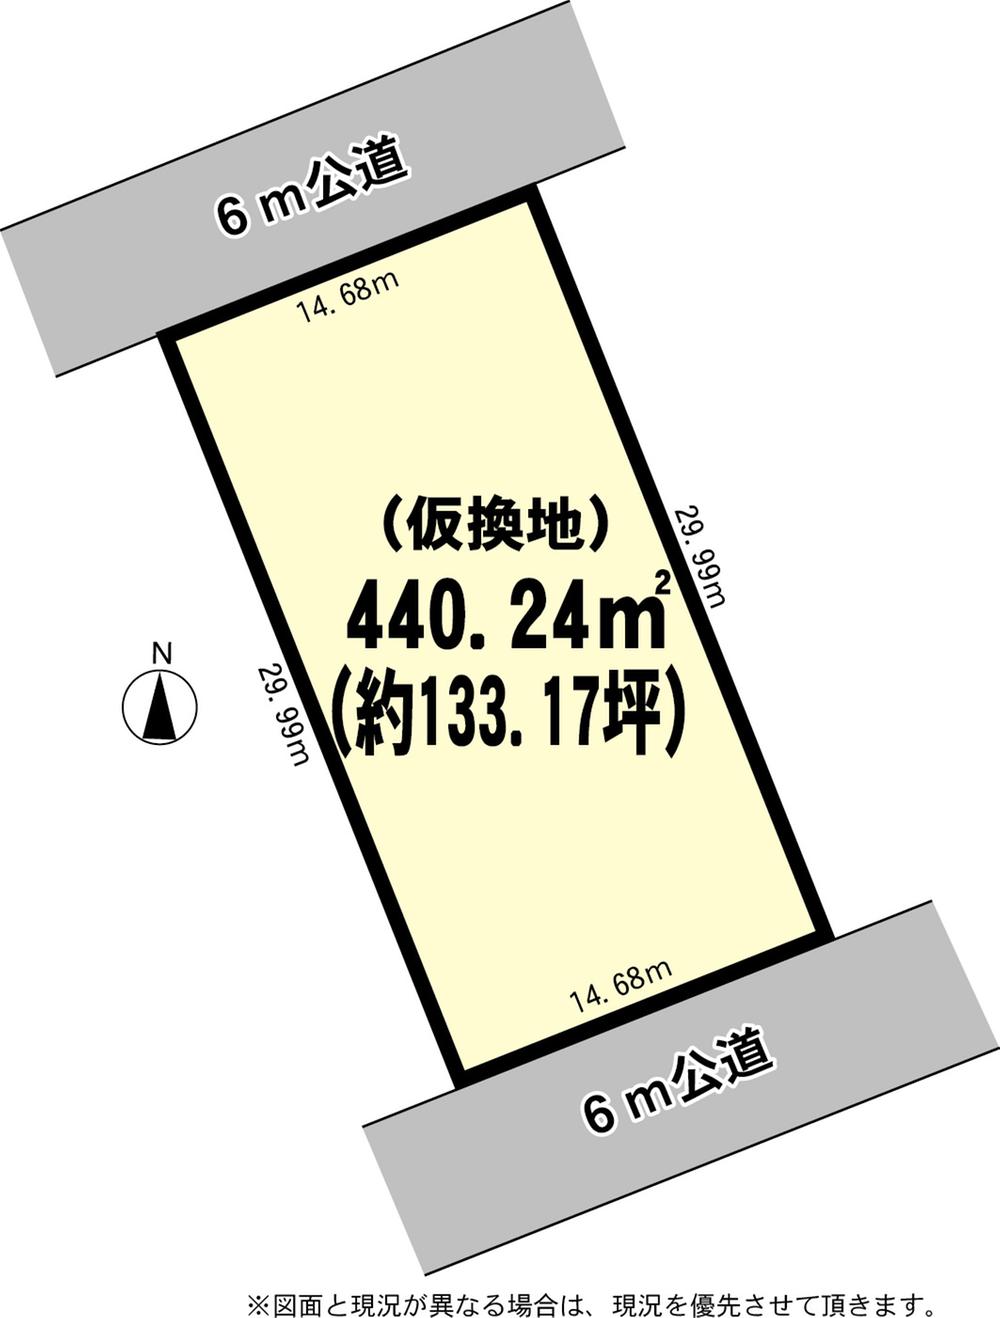 Compartment figure. Land price 27,800,000 yen, Land area 440.24 sq m